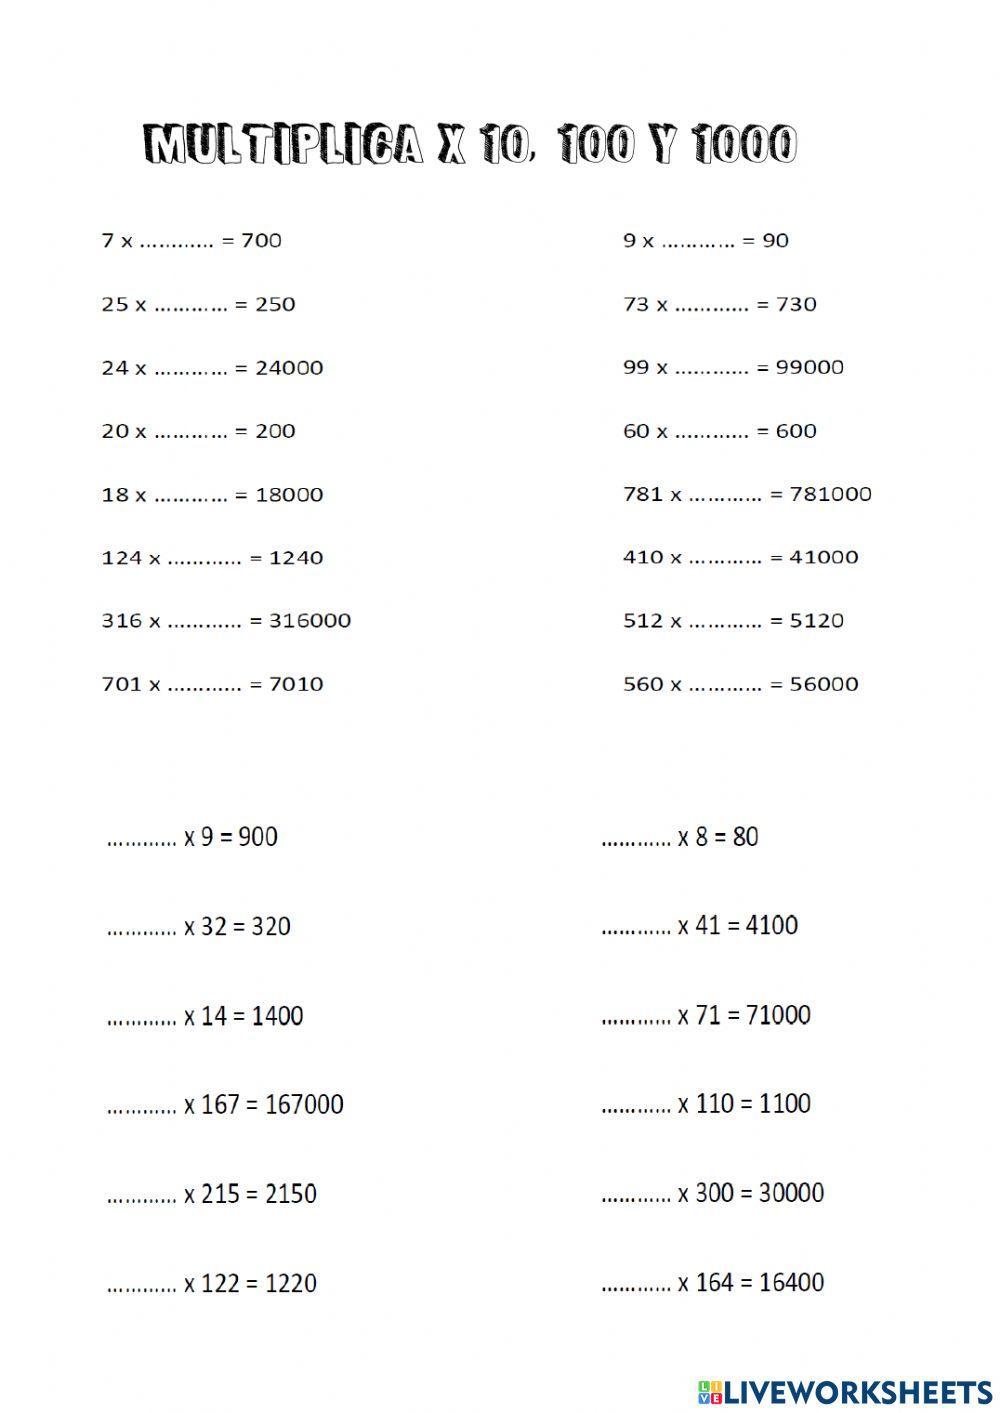 Multiplica x10,100 y 1000